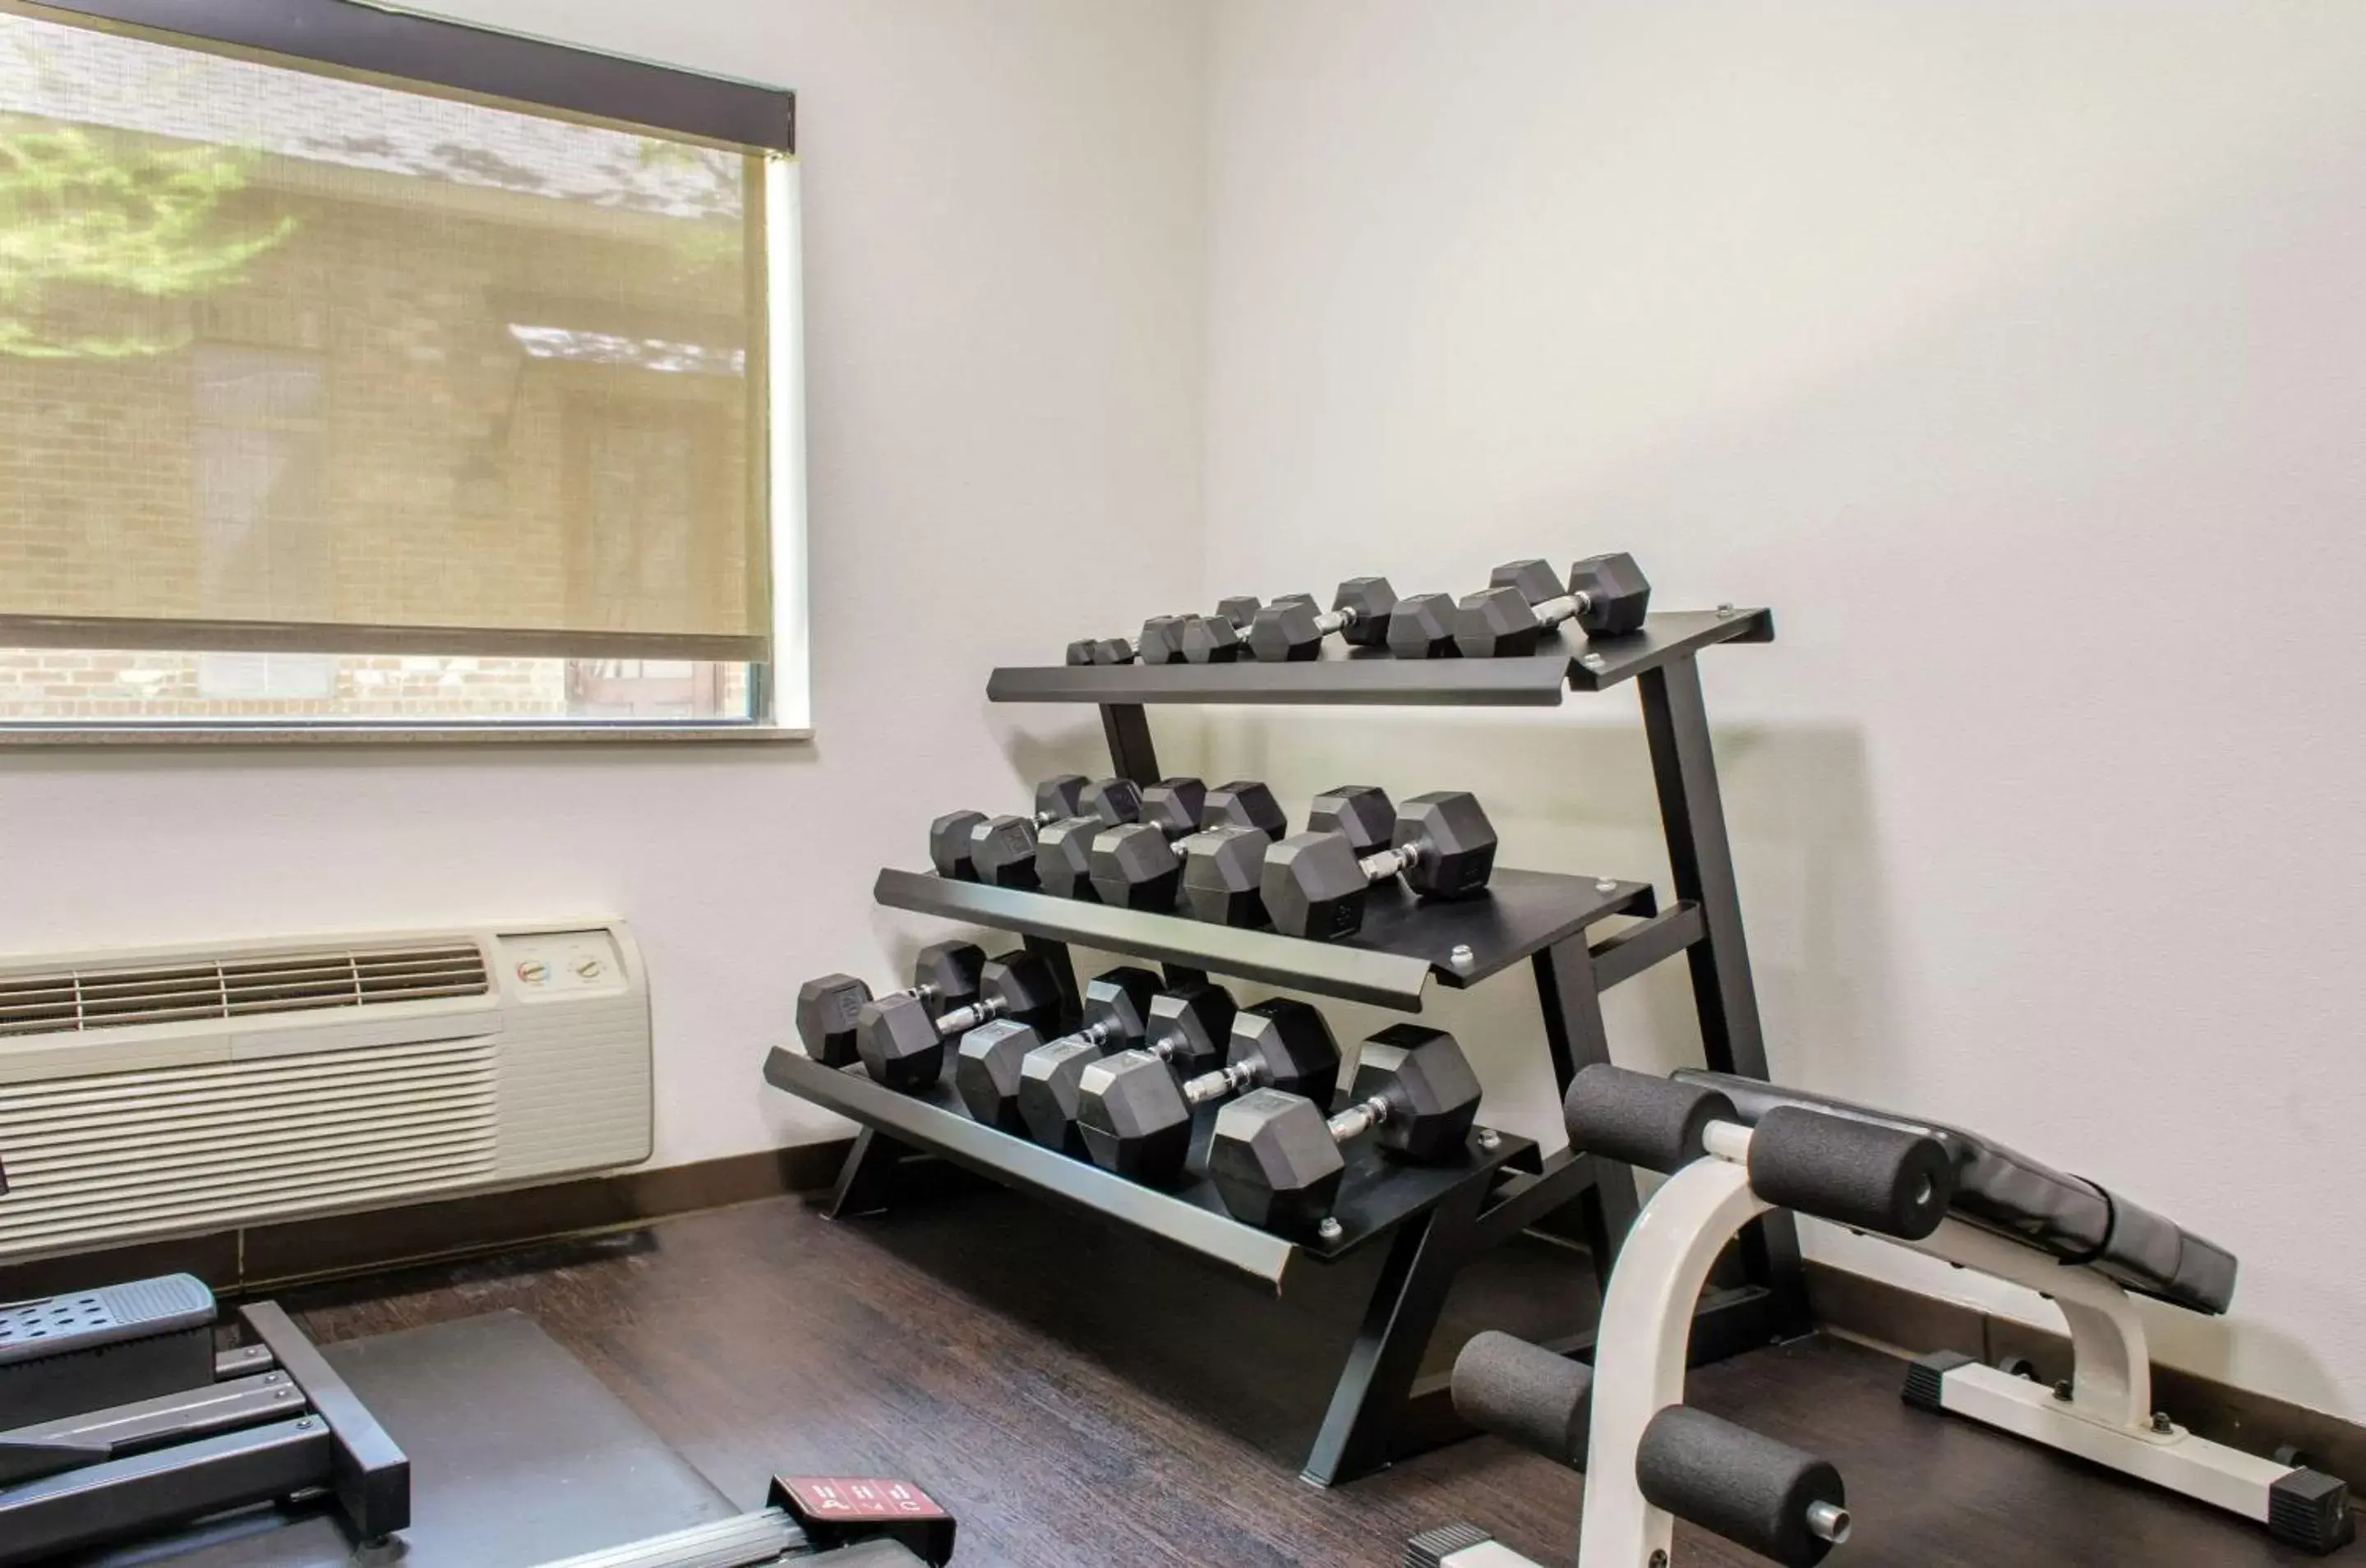 Fitness centre/facilities, Fitness Center/Facilities in Comfort Inn & Suites Covington - Mandeville